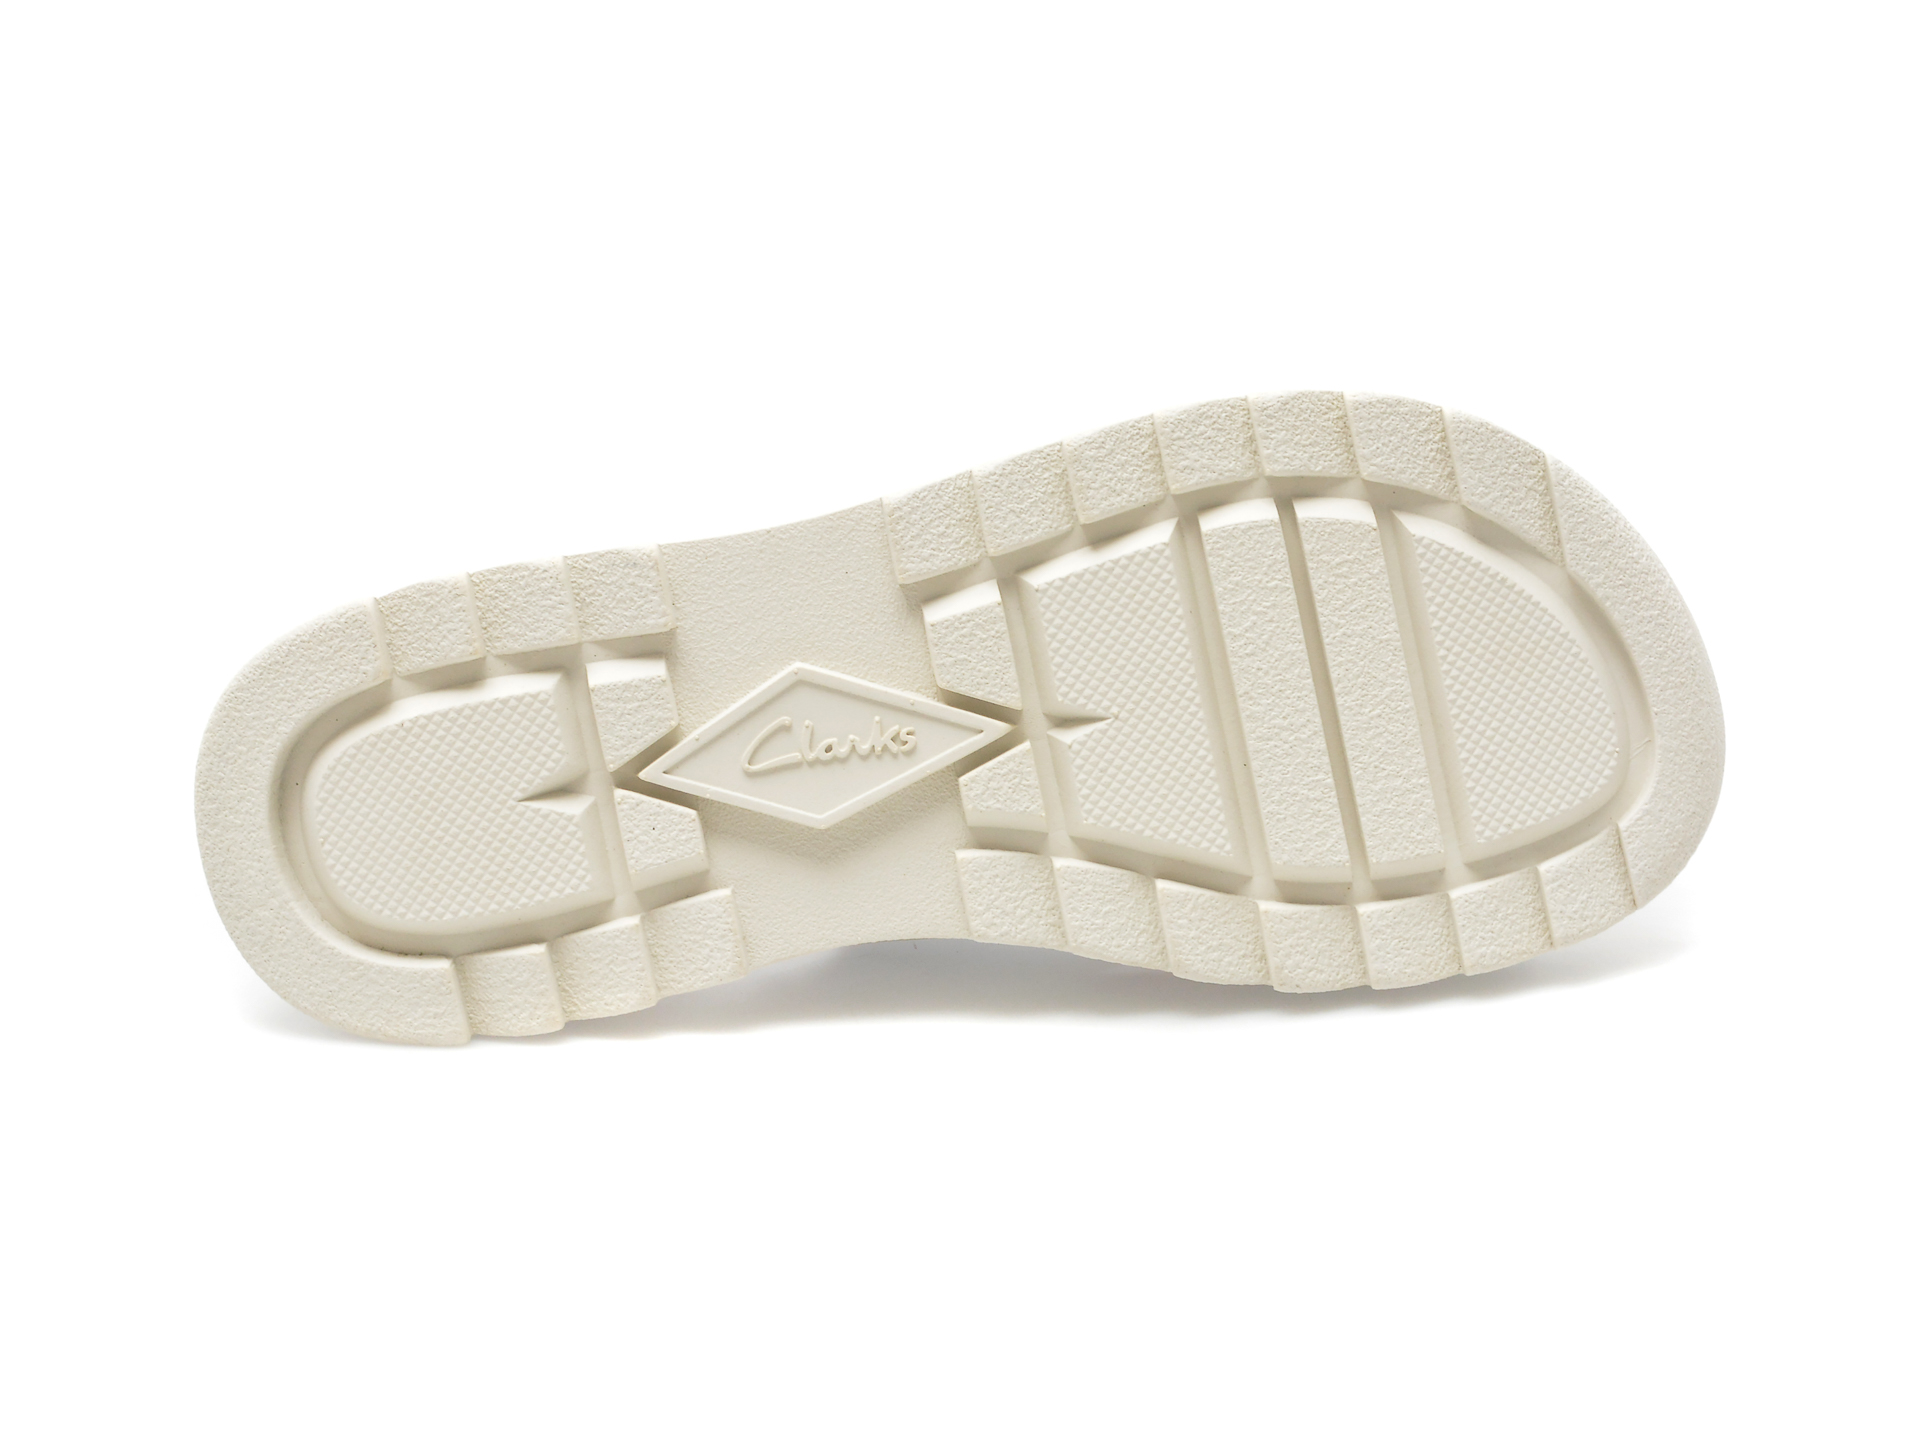 Sandale CLARKS argintii, DASHLITE WISH 18-N, din piele naturala